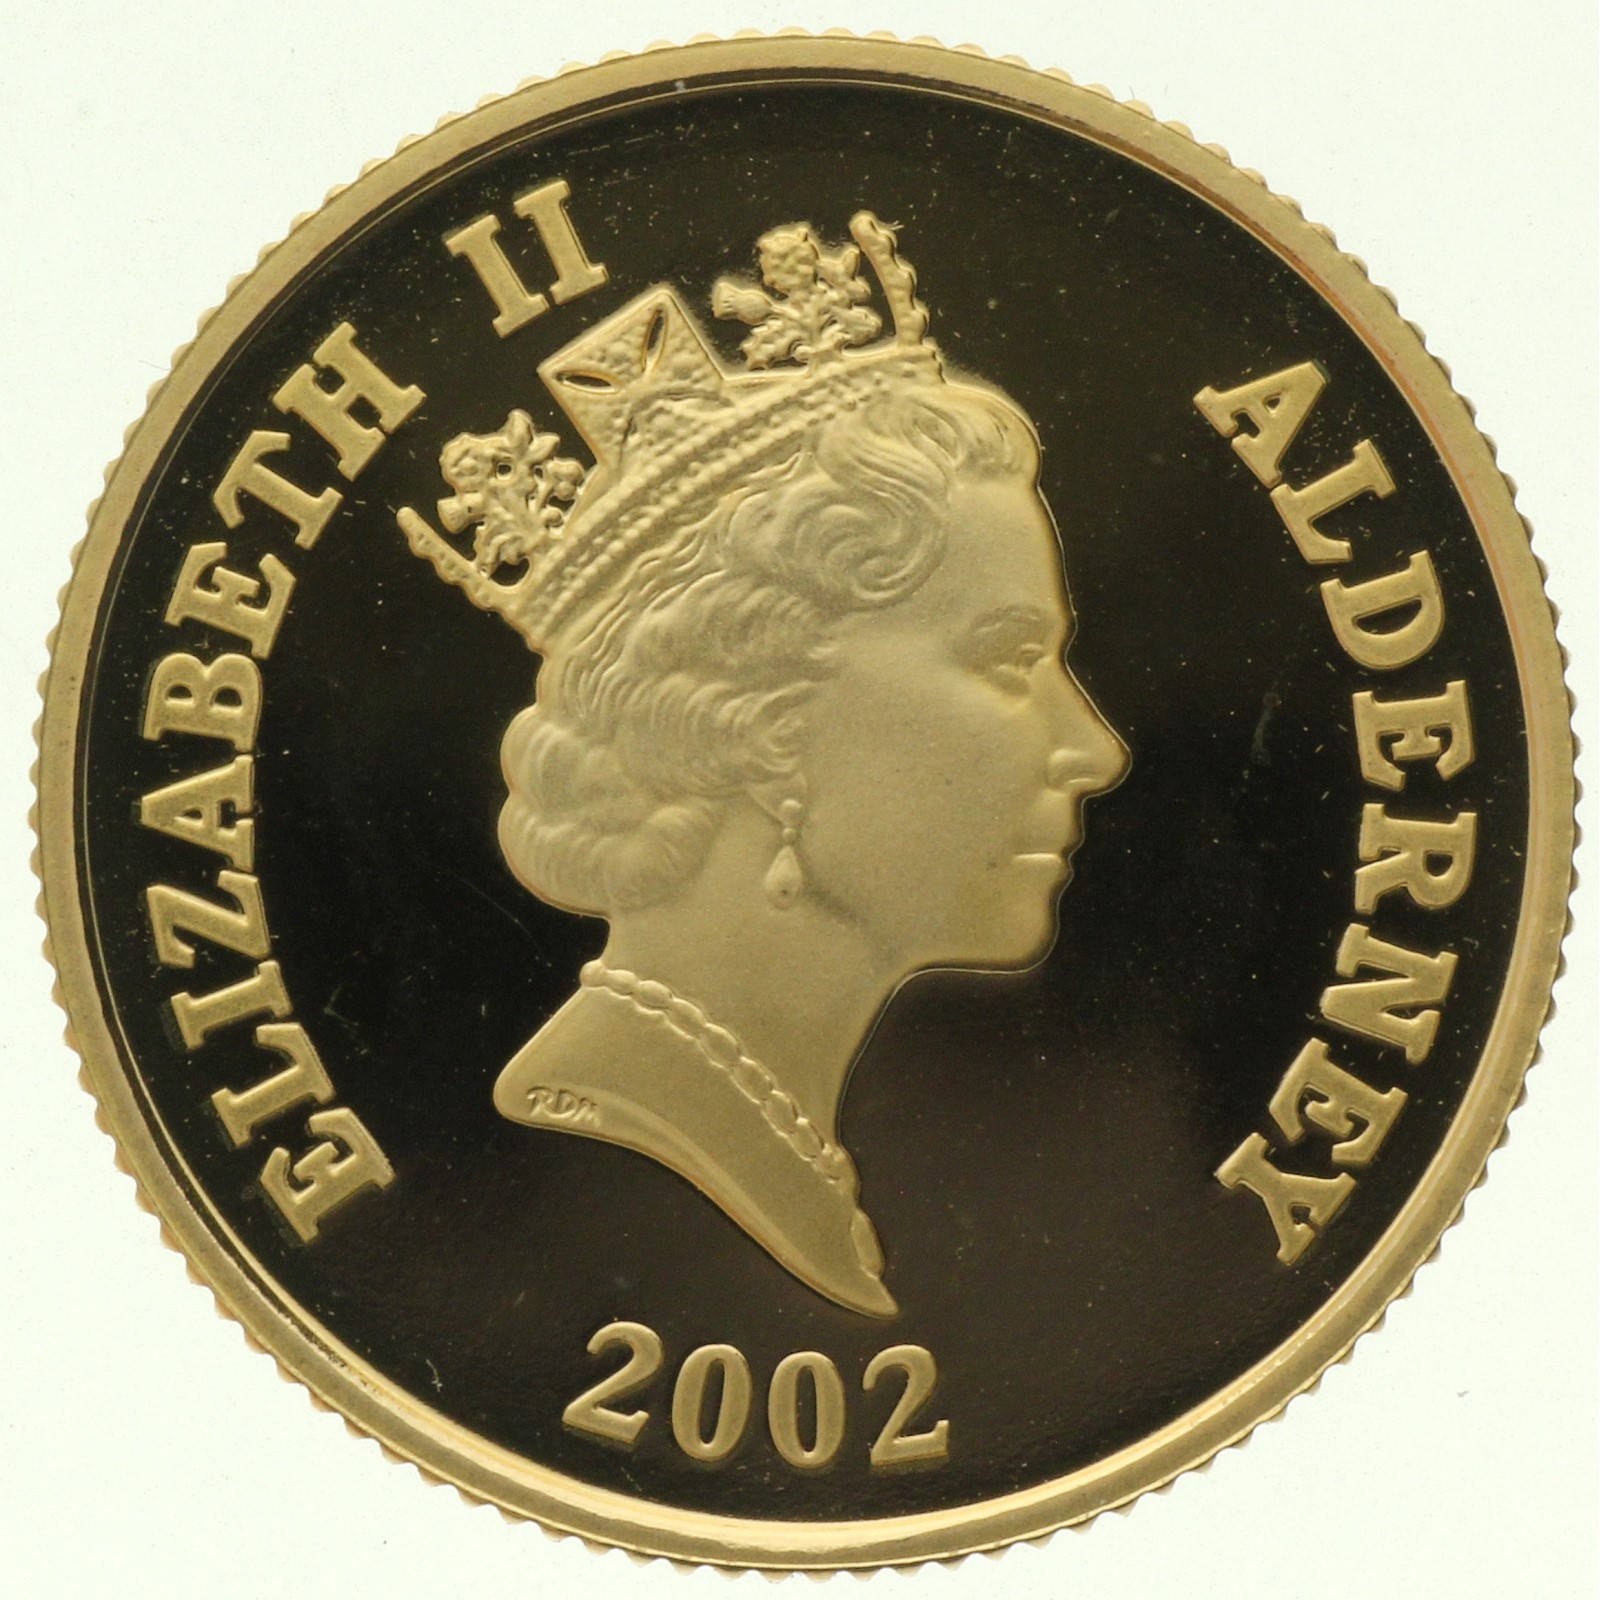 Alderney - 25 Pounds - 2002 -  Elizabeth II - Golden Jubilee of Reign